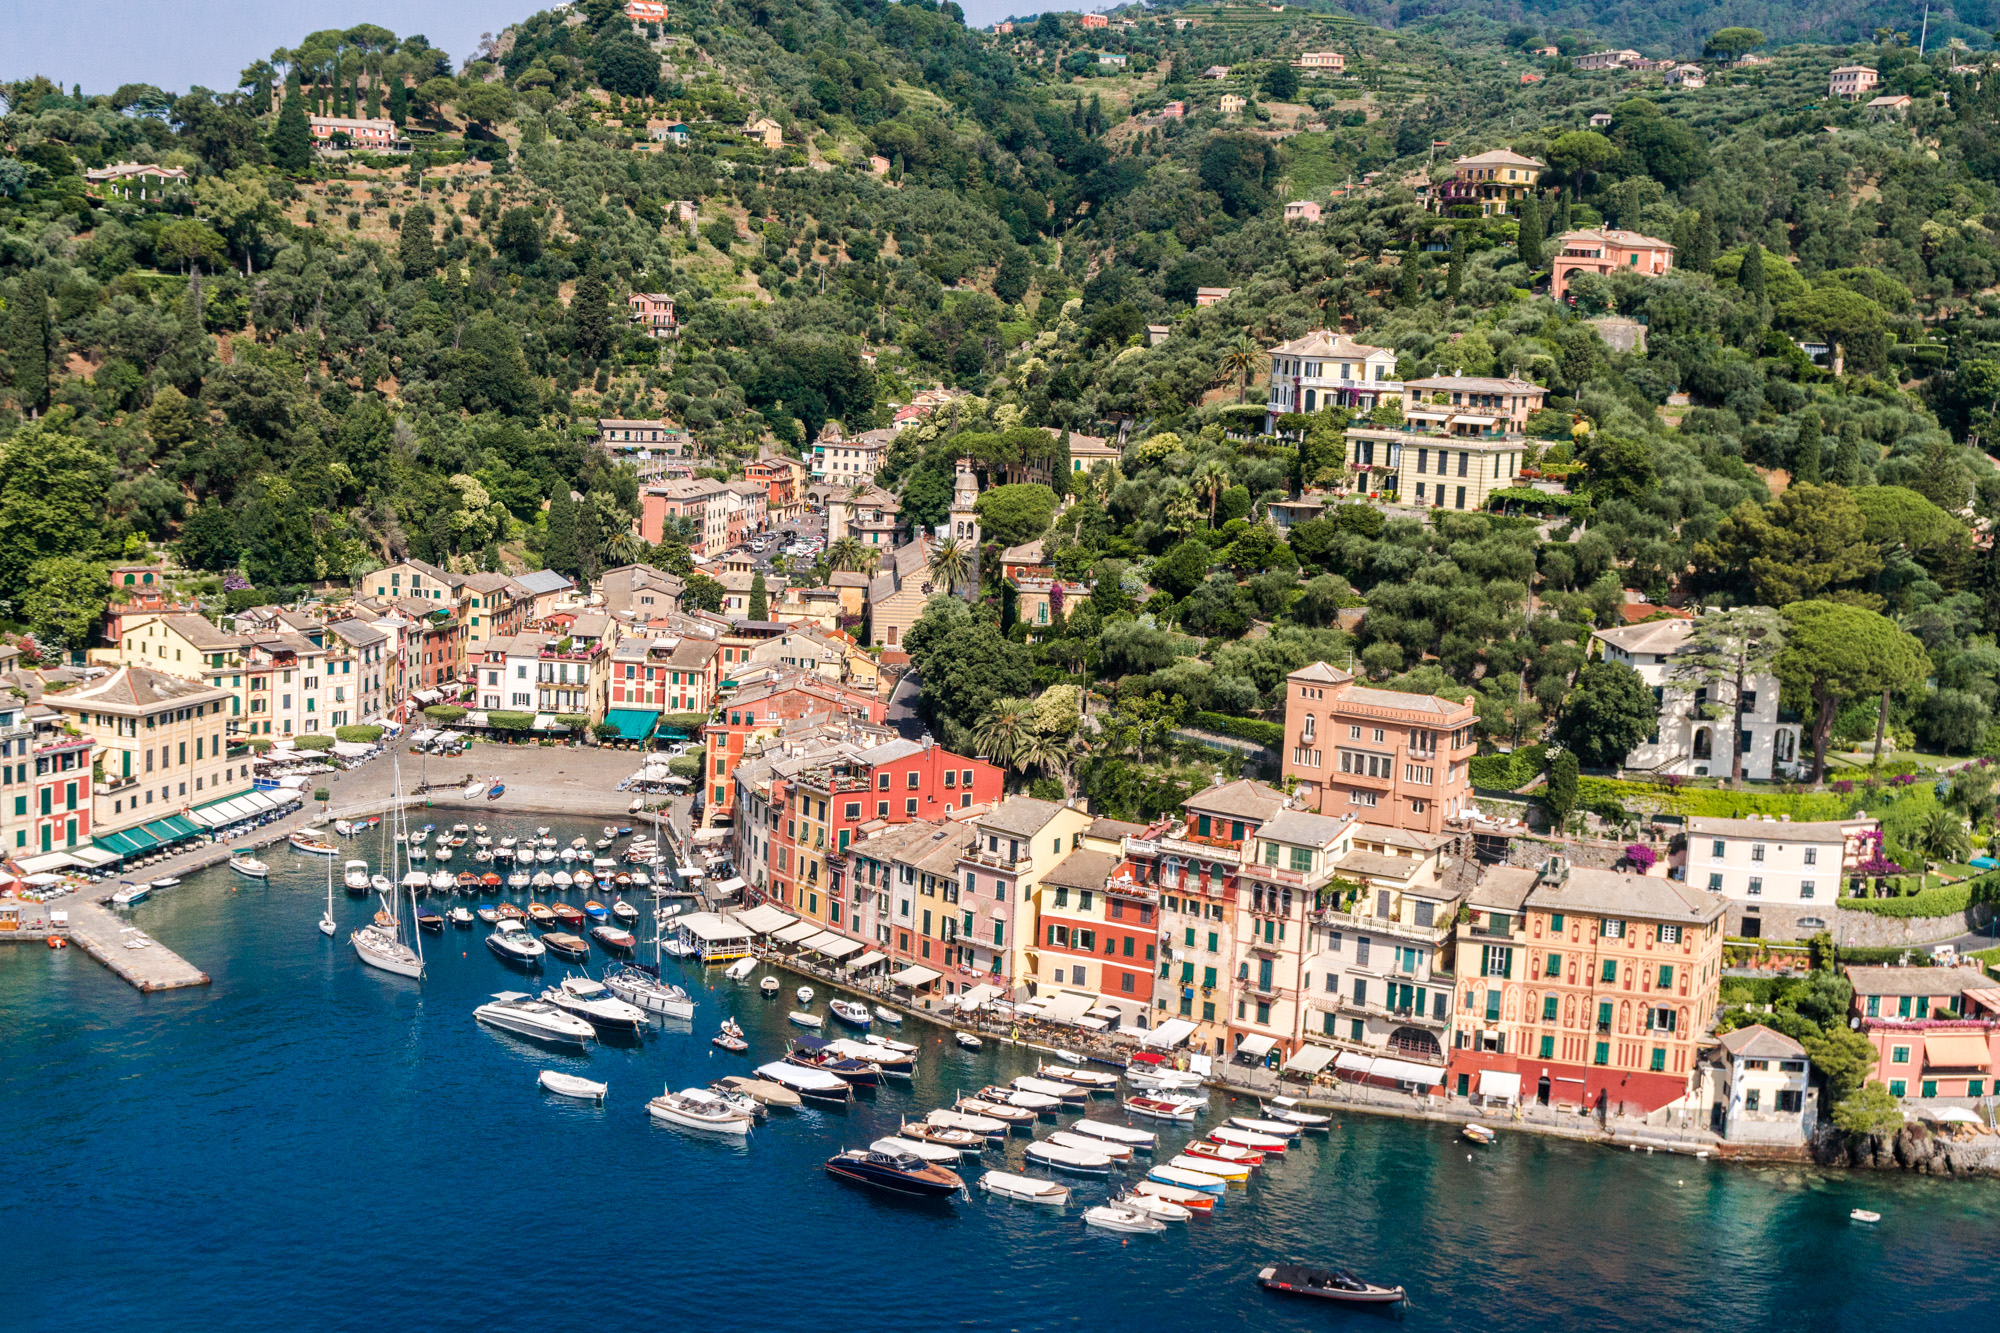 France/Italy roadtrip – Portofino